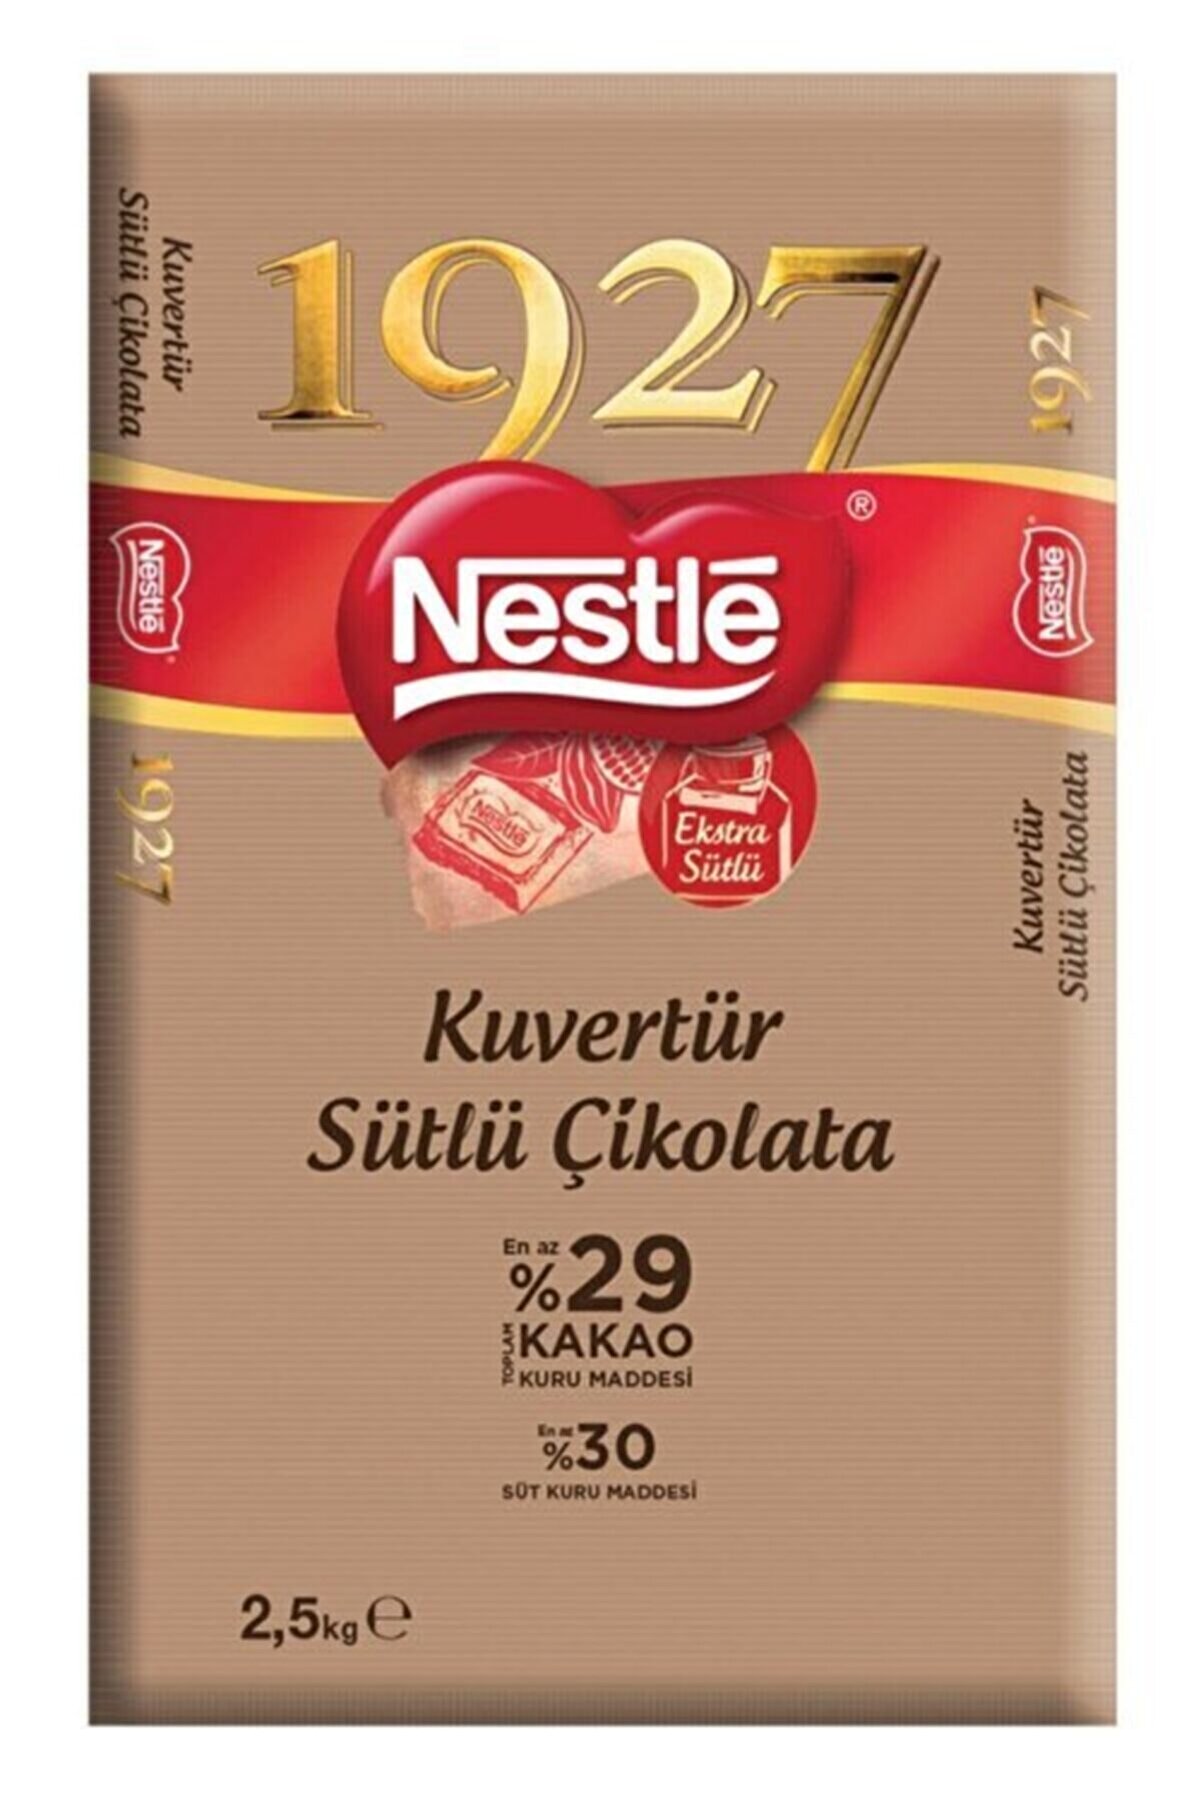 Nestle Nestlé 1927 Kuvertür Sütlü Çikolata 2.5kg